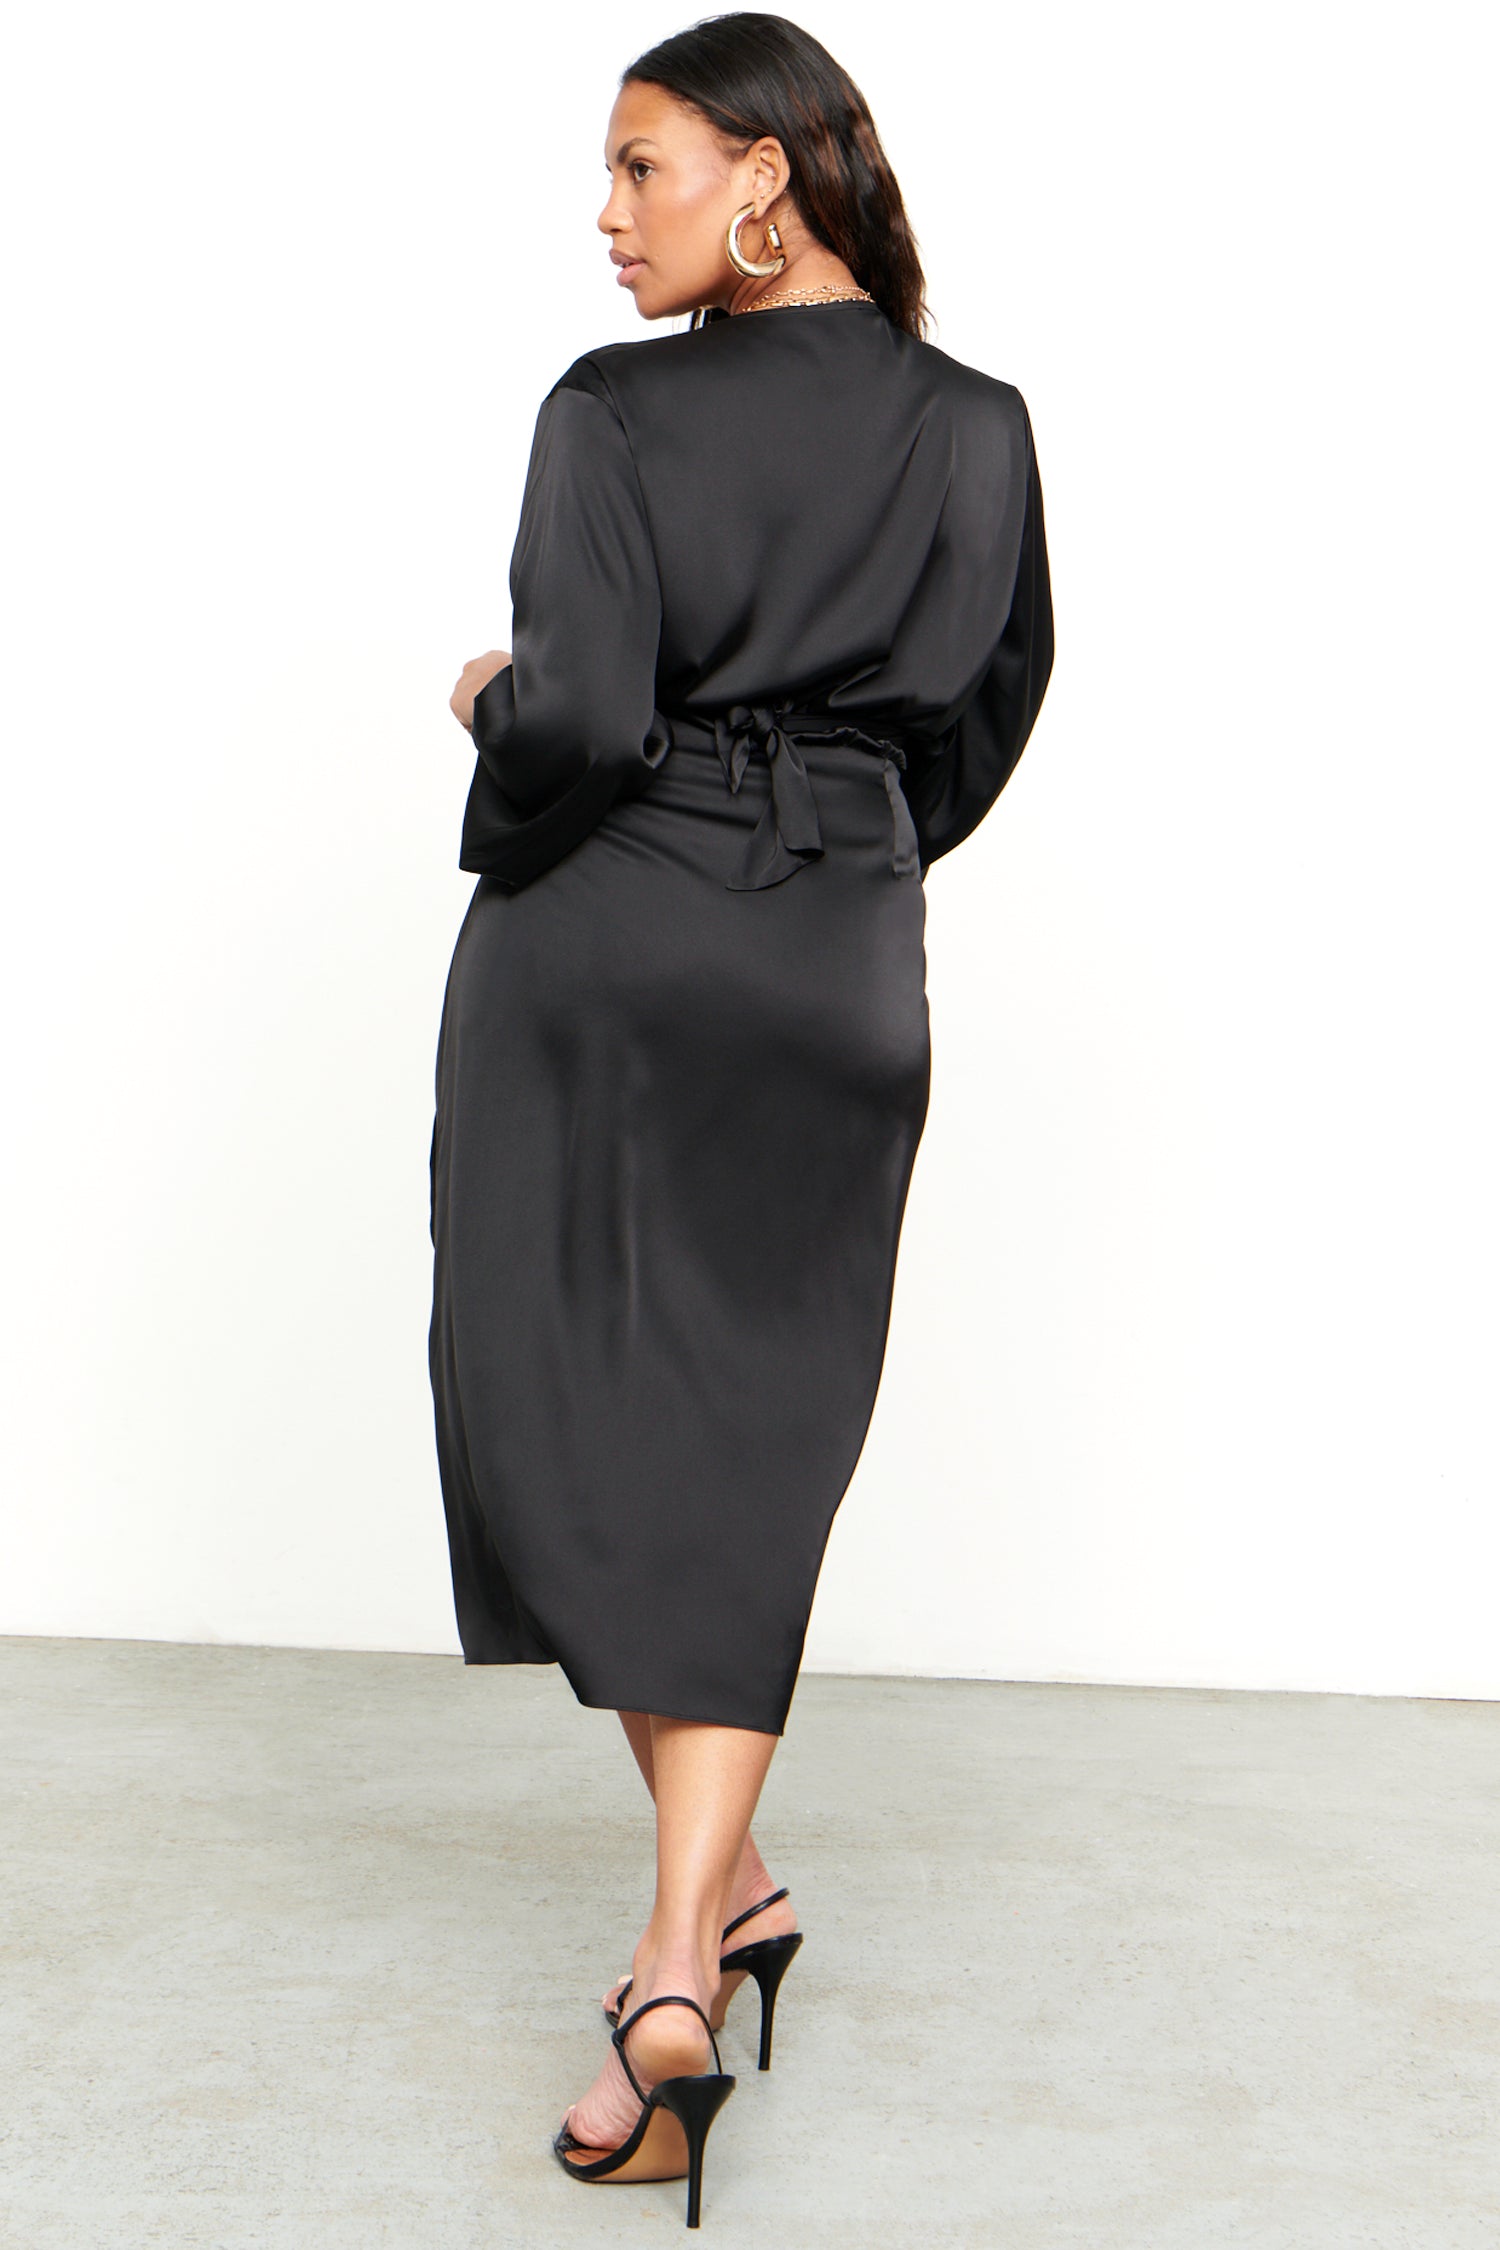 Model wearing Black Midi Vienna Dress standing facing away from the camera